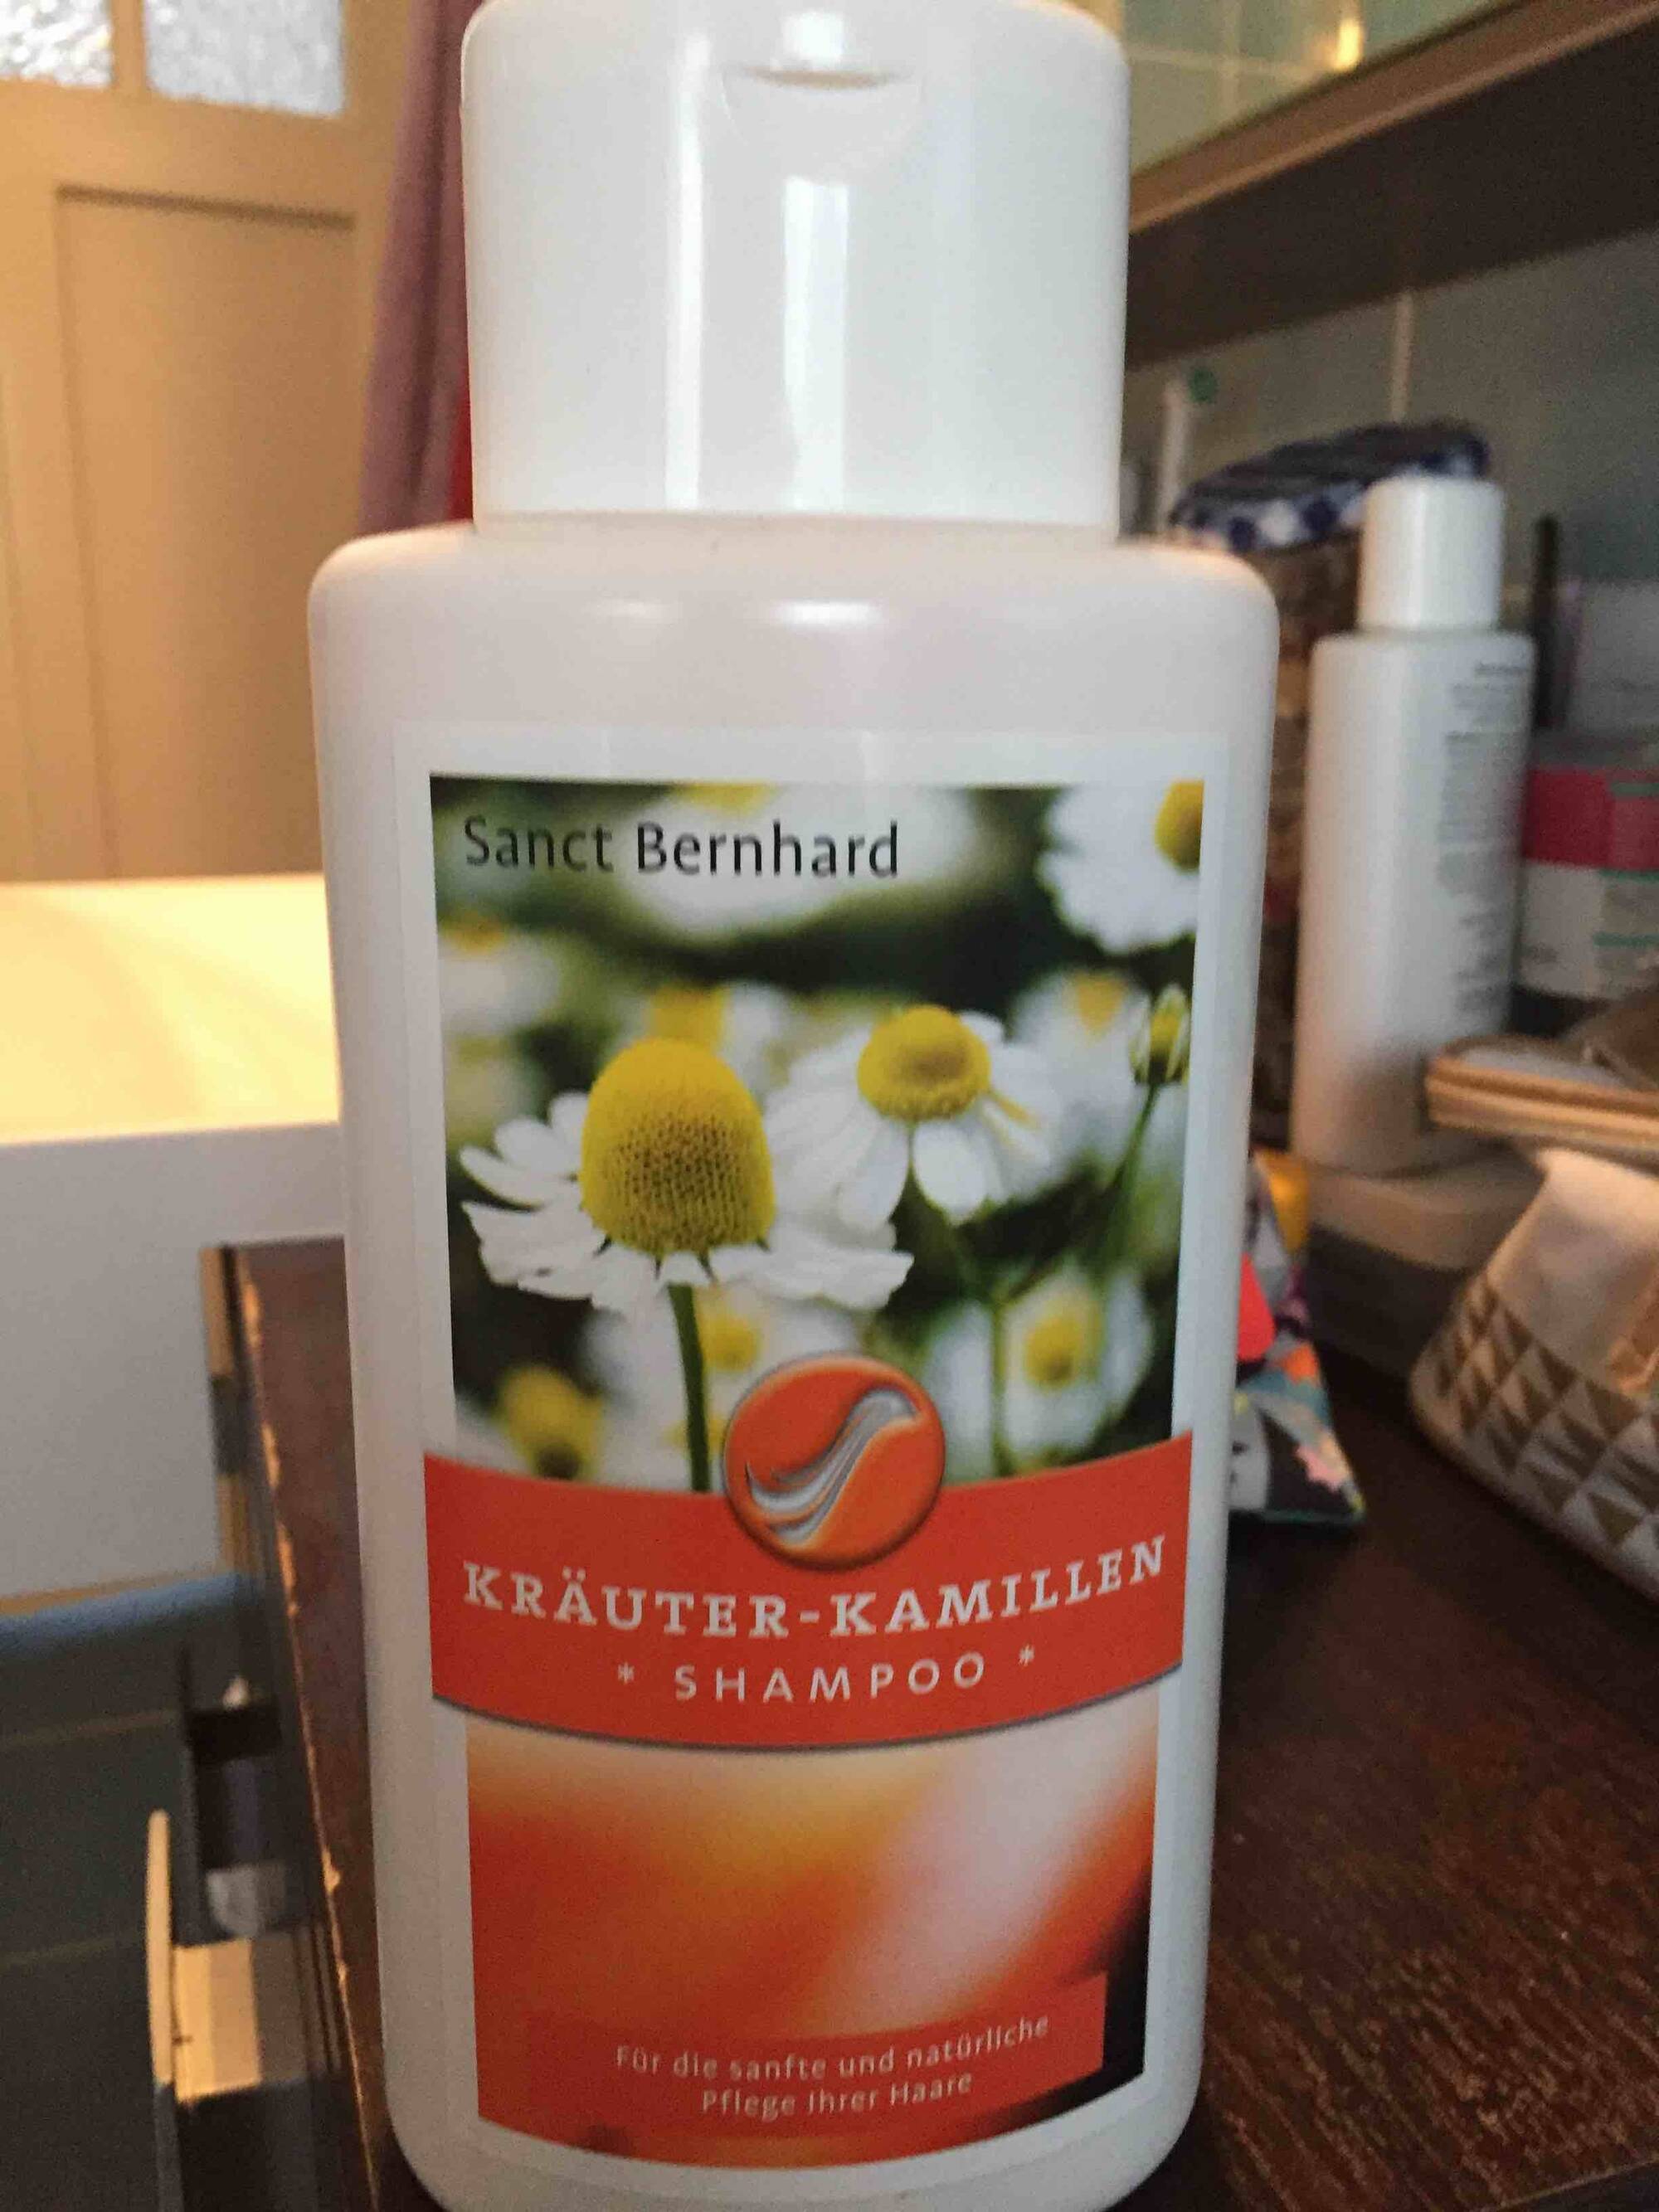 SANCT BERNHARD - Kräuter-kamillen - Shampoo